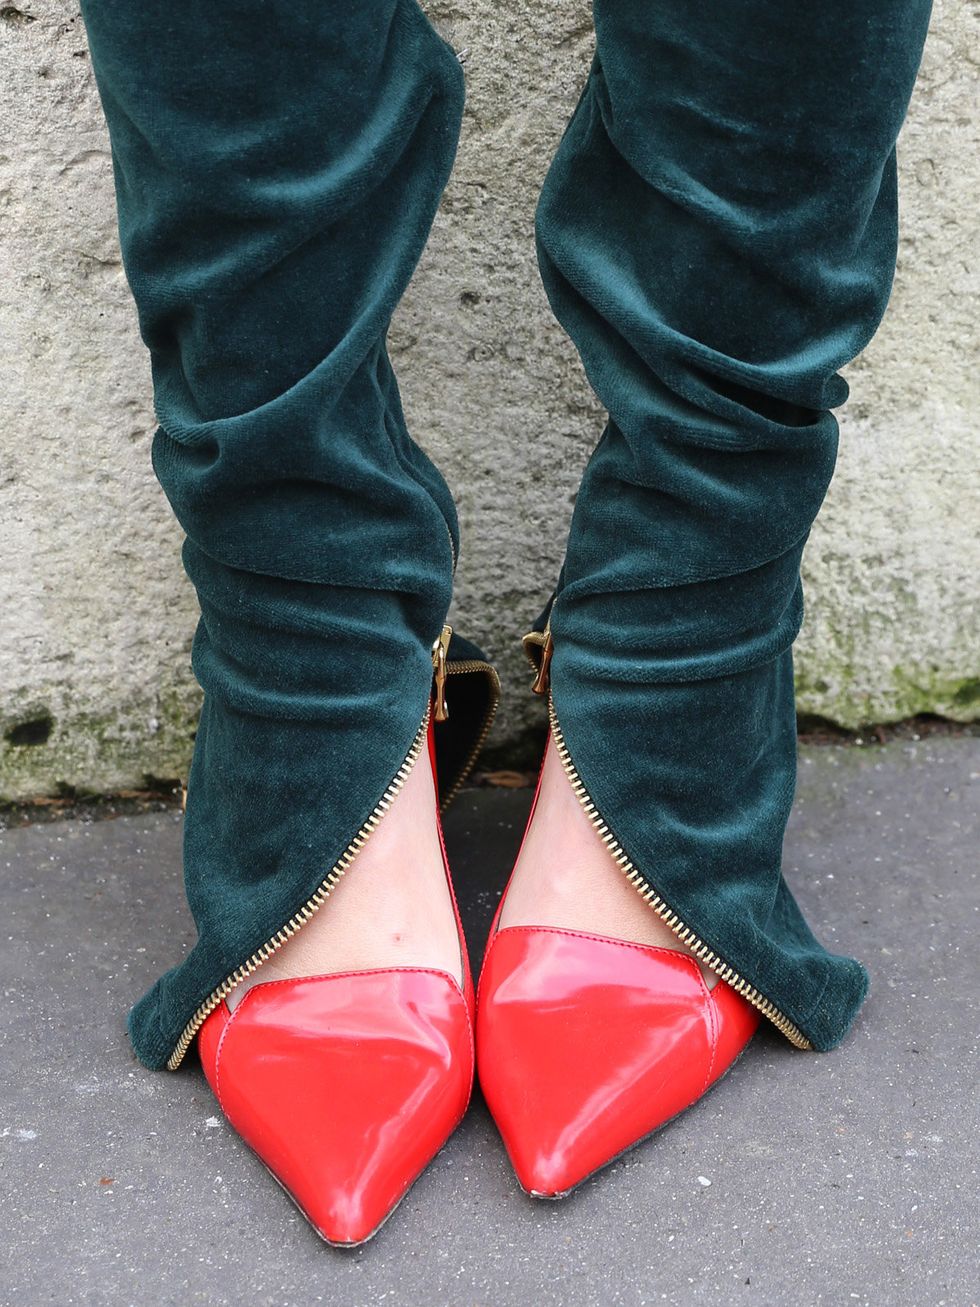 Green, Shoe, Red, Style, Carmine, Fashion, Teal, Fashion design, Leather, Dress shoe, 